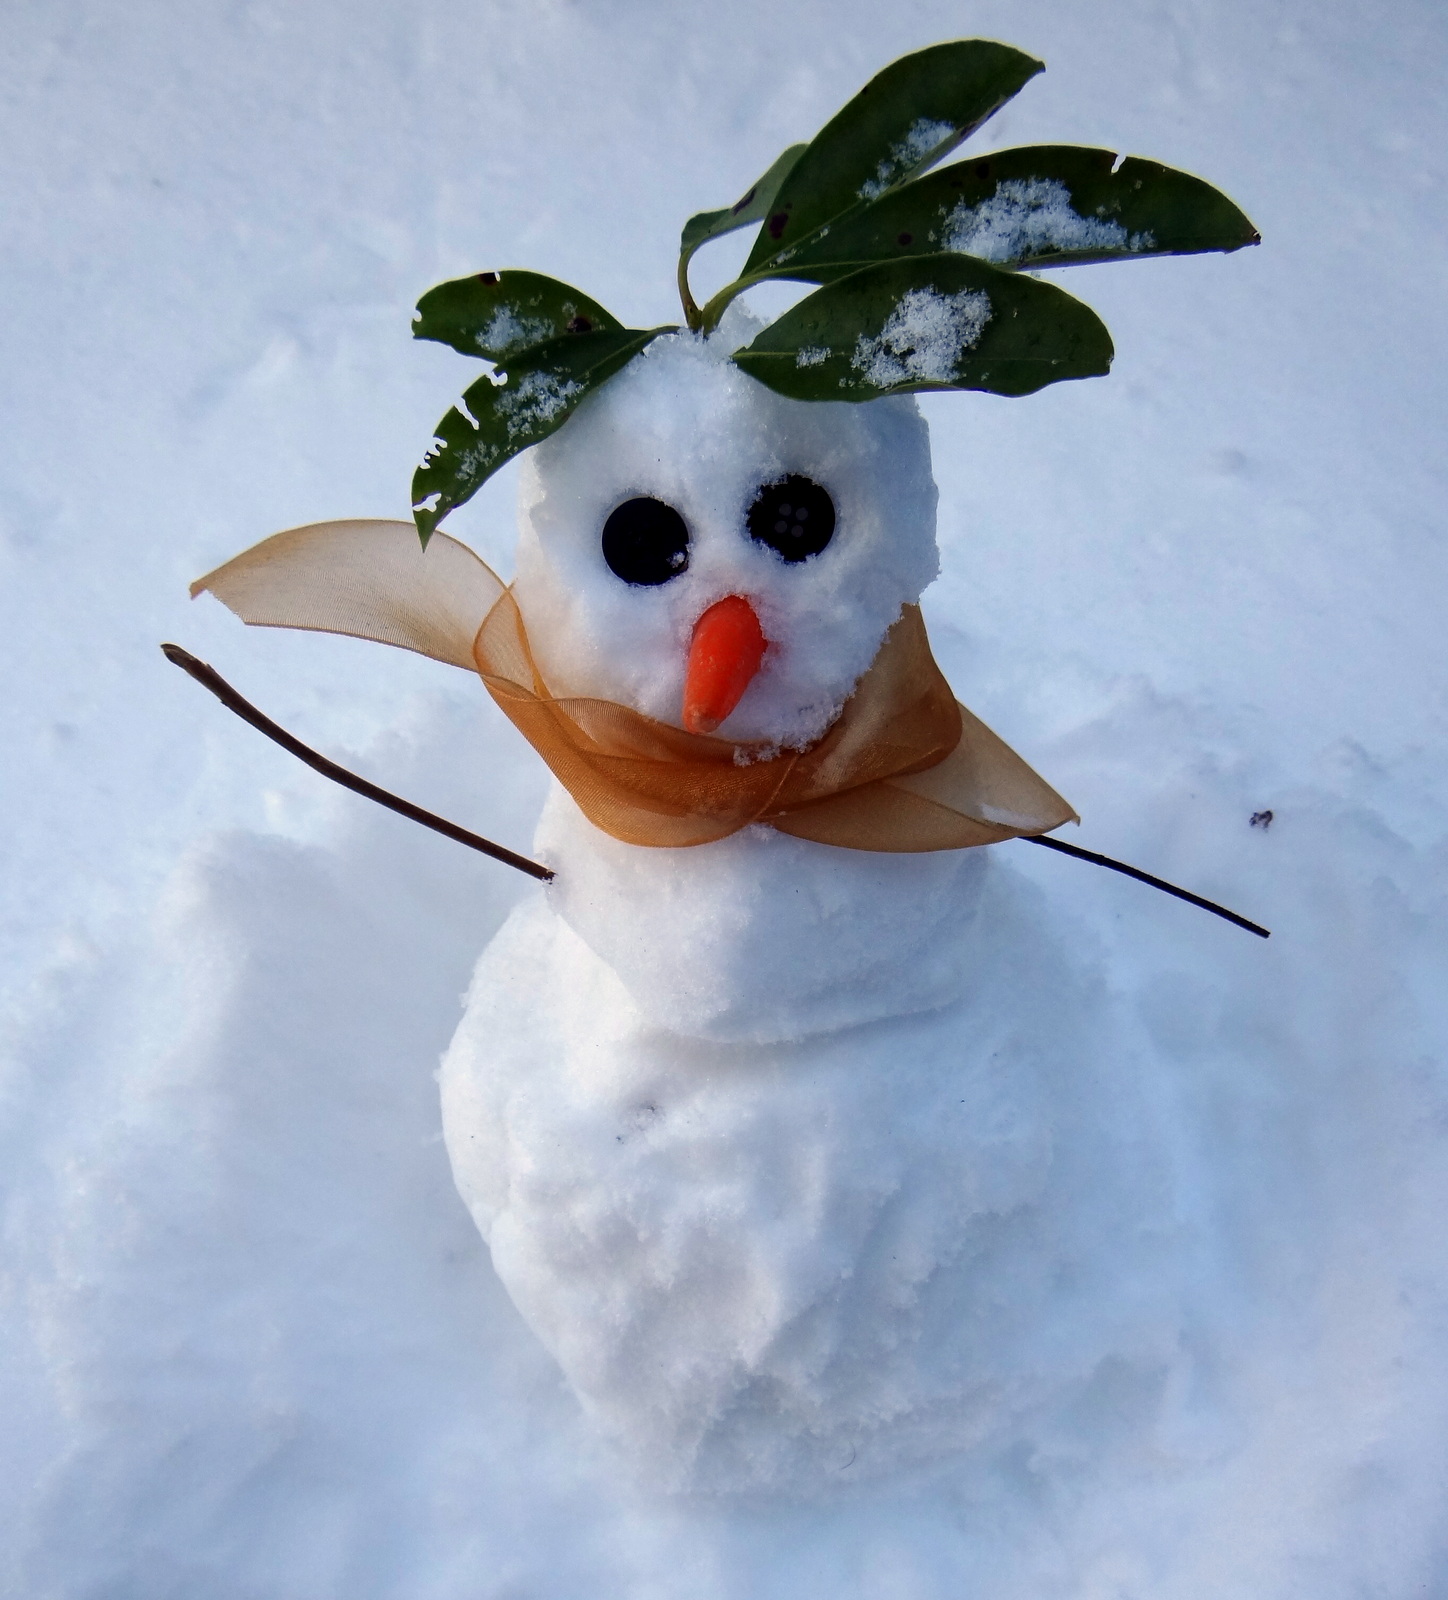 Miniature snowman